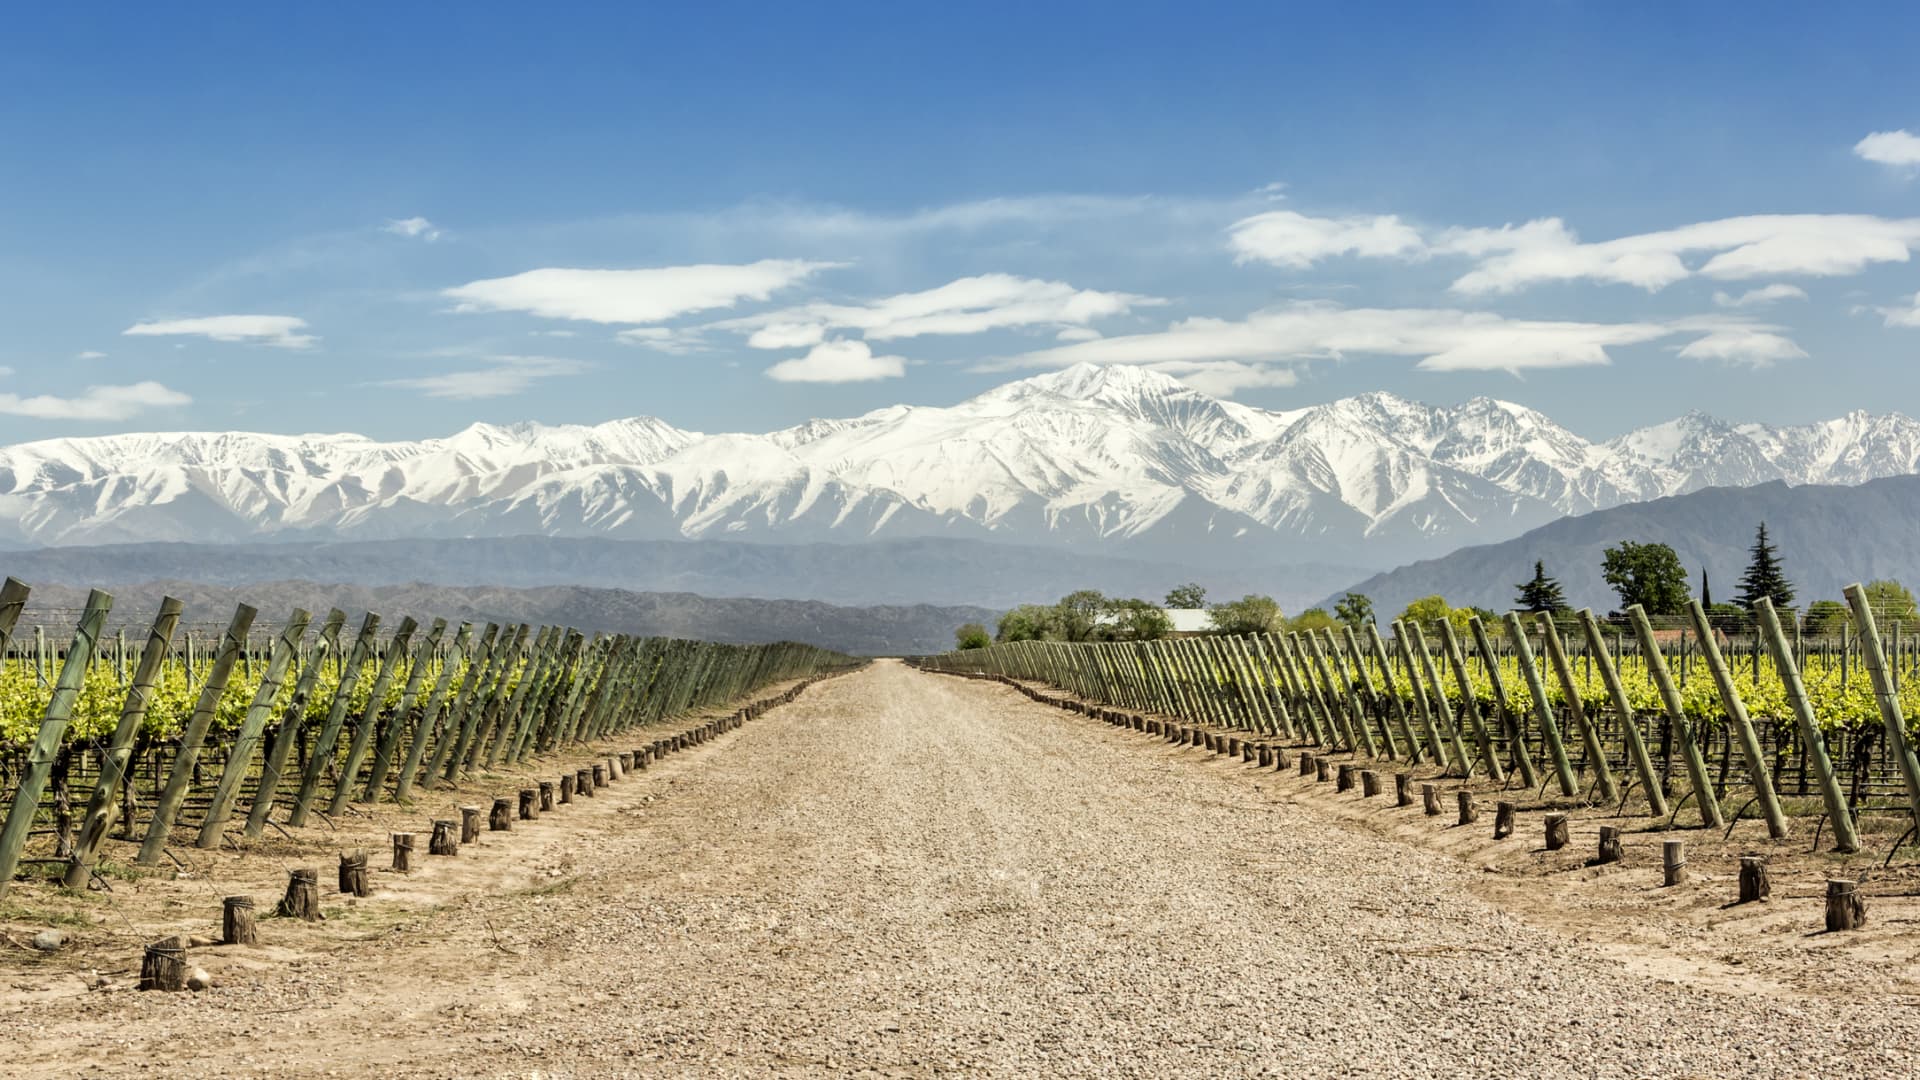 Vineyards in the Mendoza wine region of Argentina.